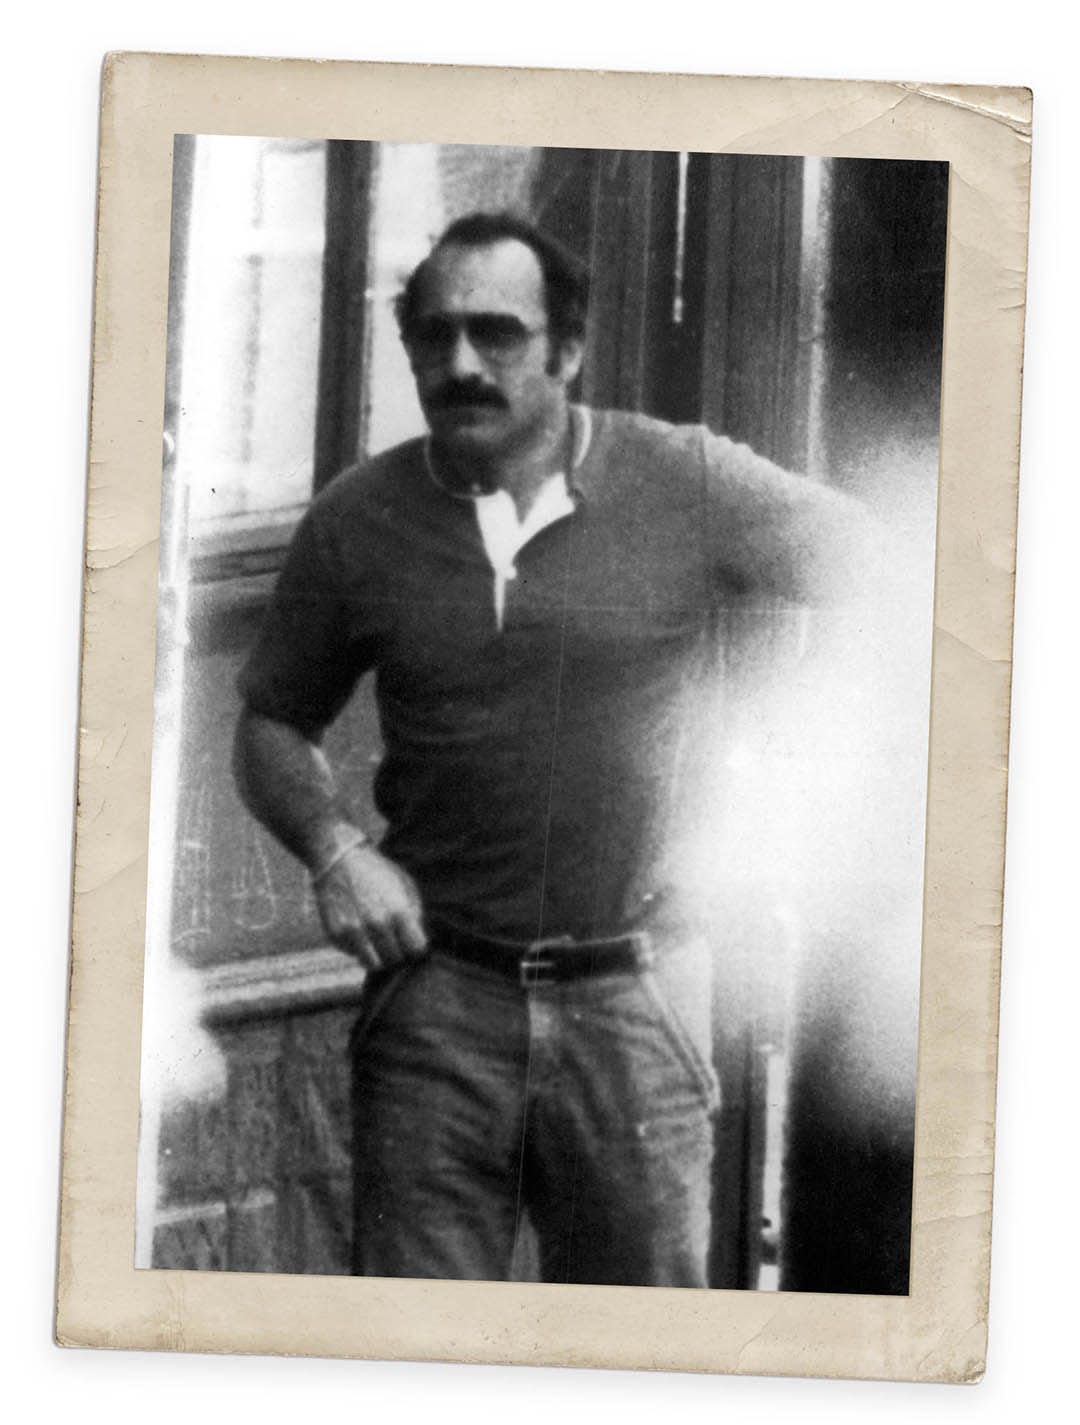 An undated surveillance photo of FBI Agent Joe Pistone while undercover as “Donnie Brasco.”